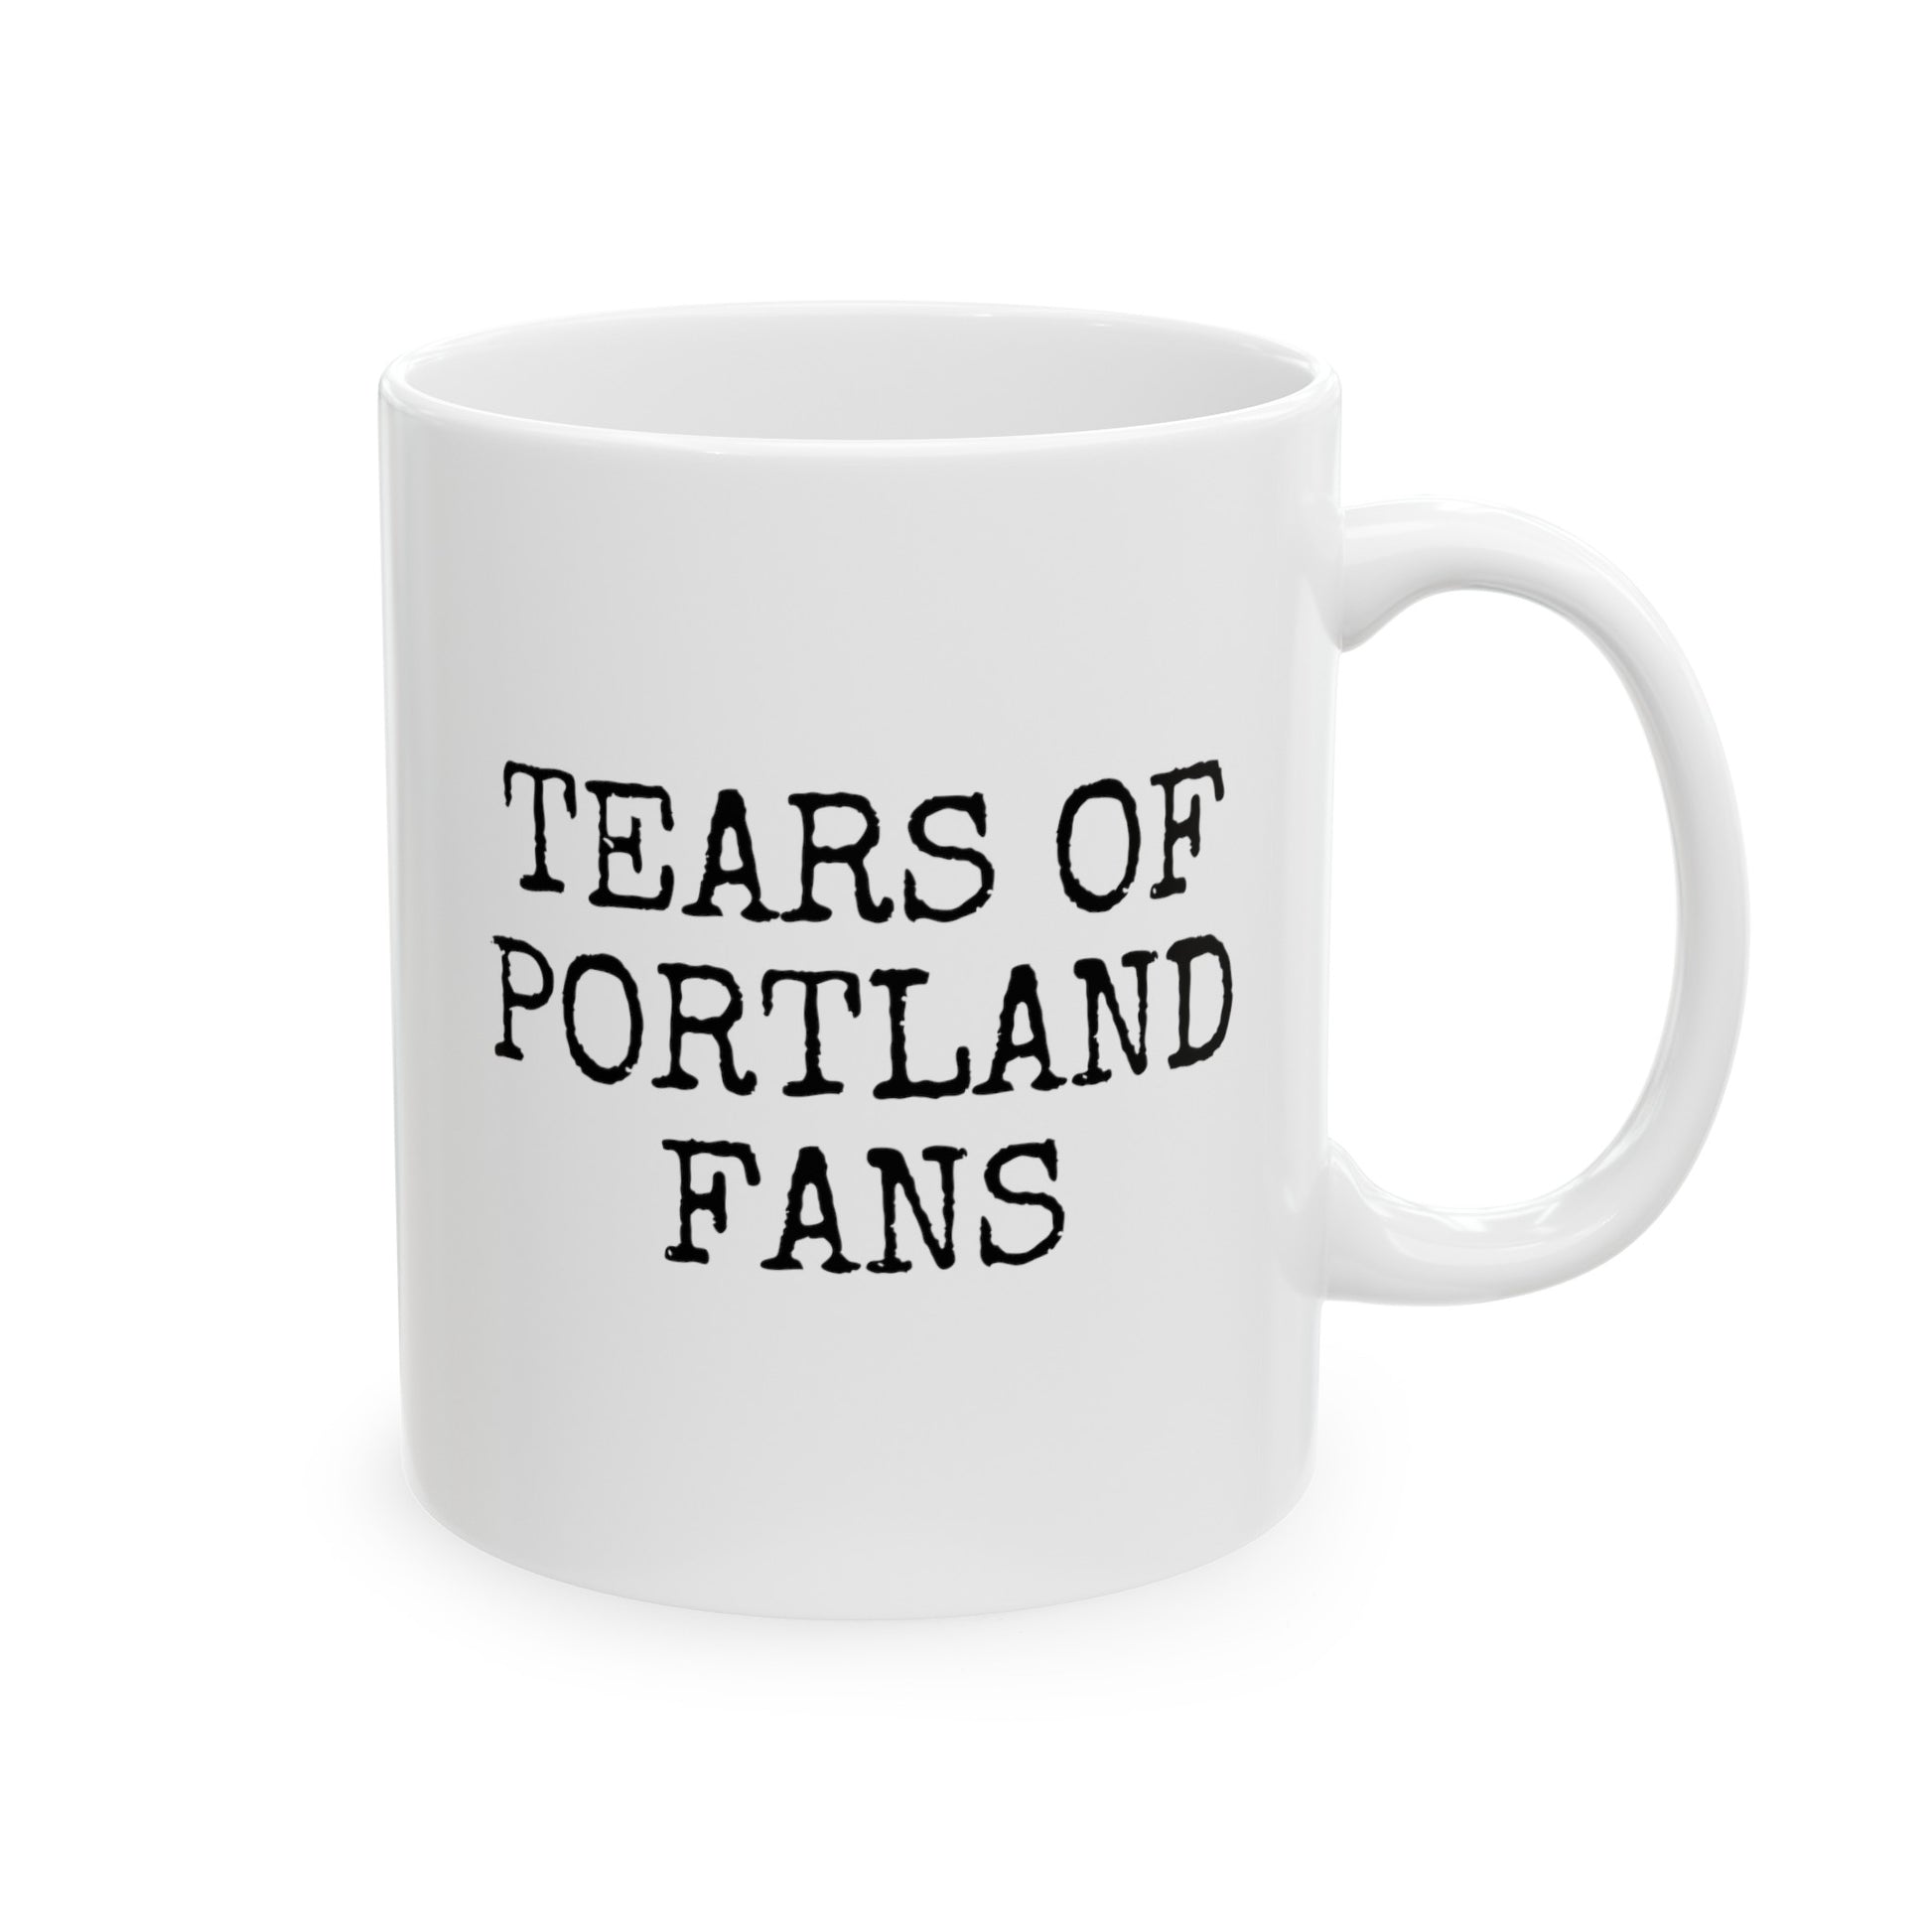 Tears Of Portland Fans 11oz white funny large coffee mug gift for football footie soccer cup futbol is life waveywares wavey wares wavywares wavy wares